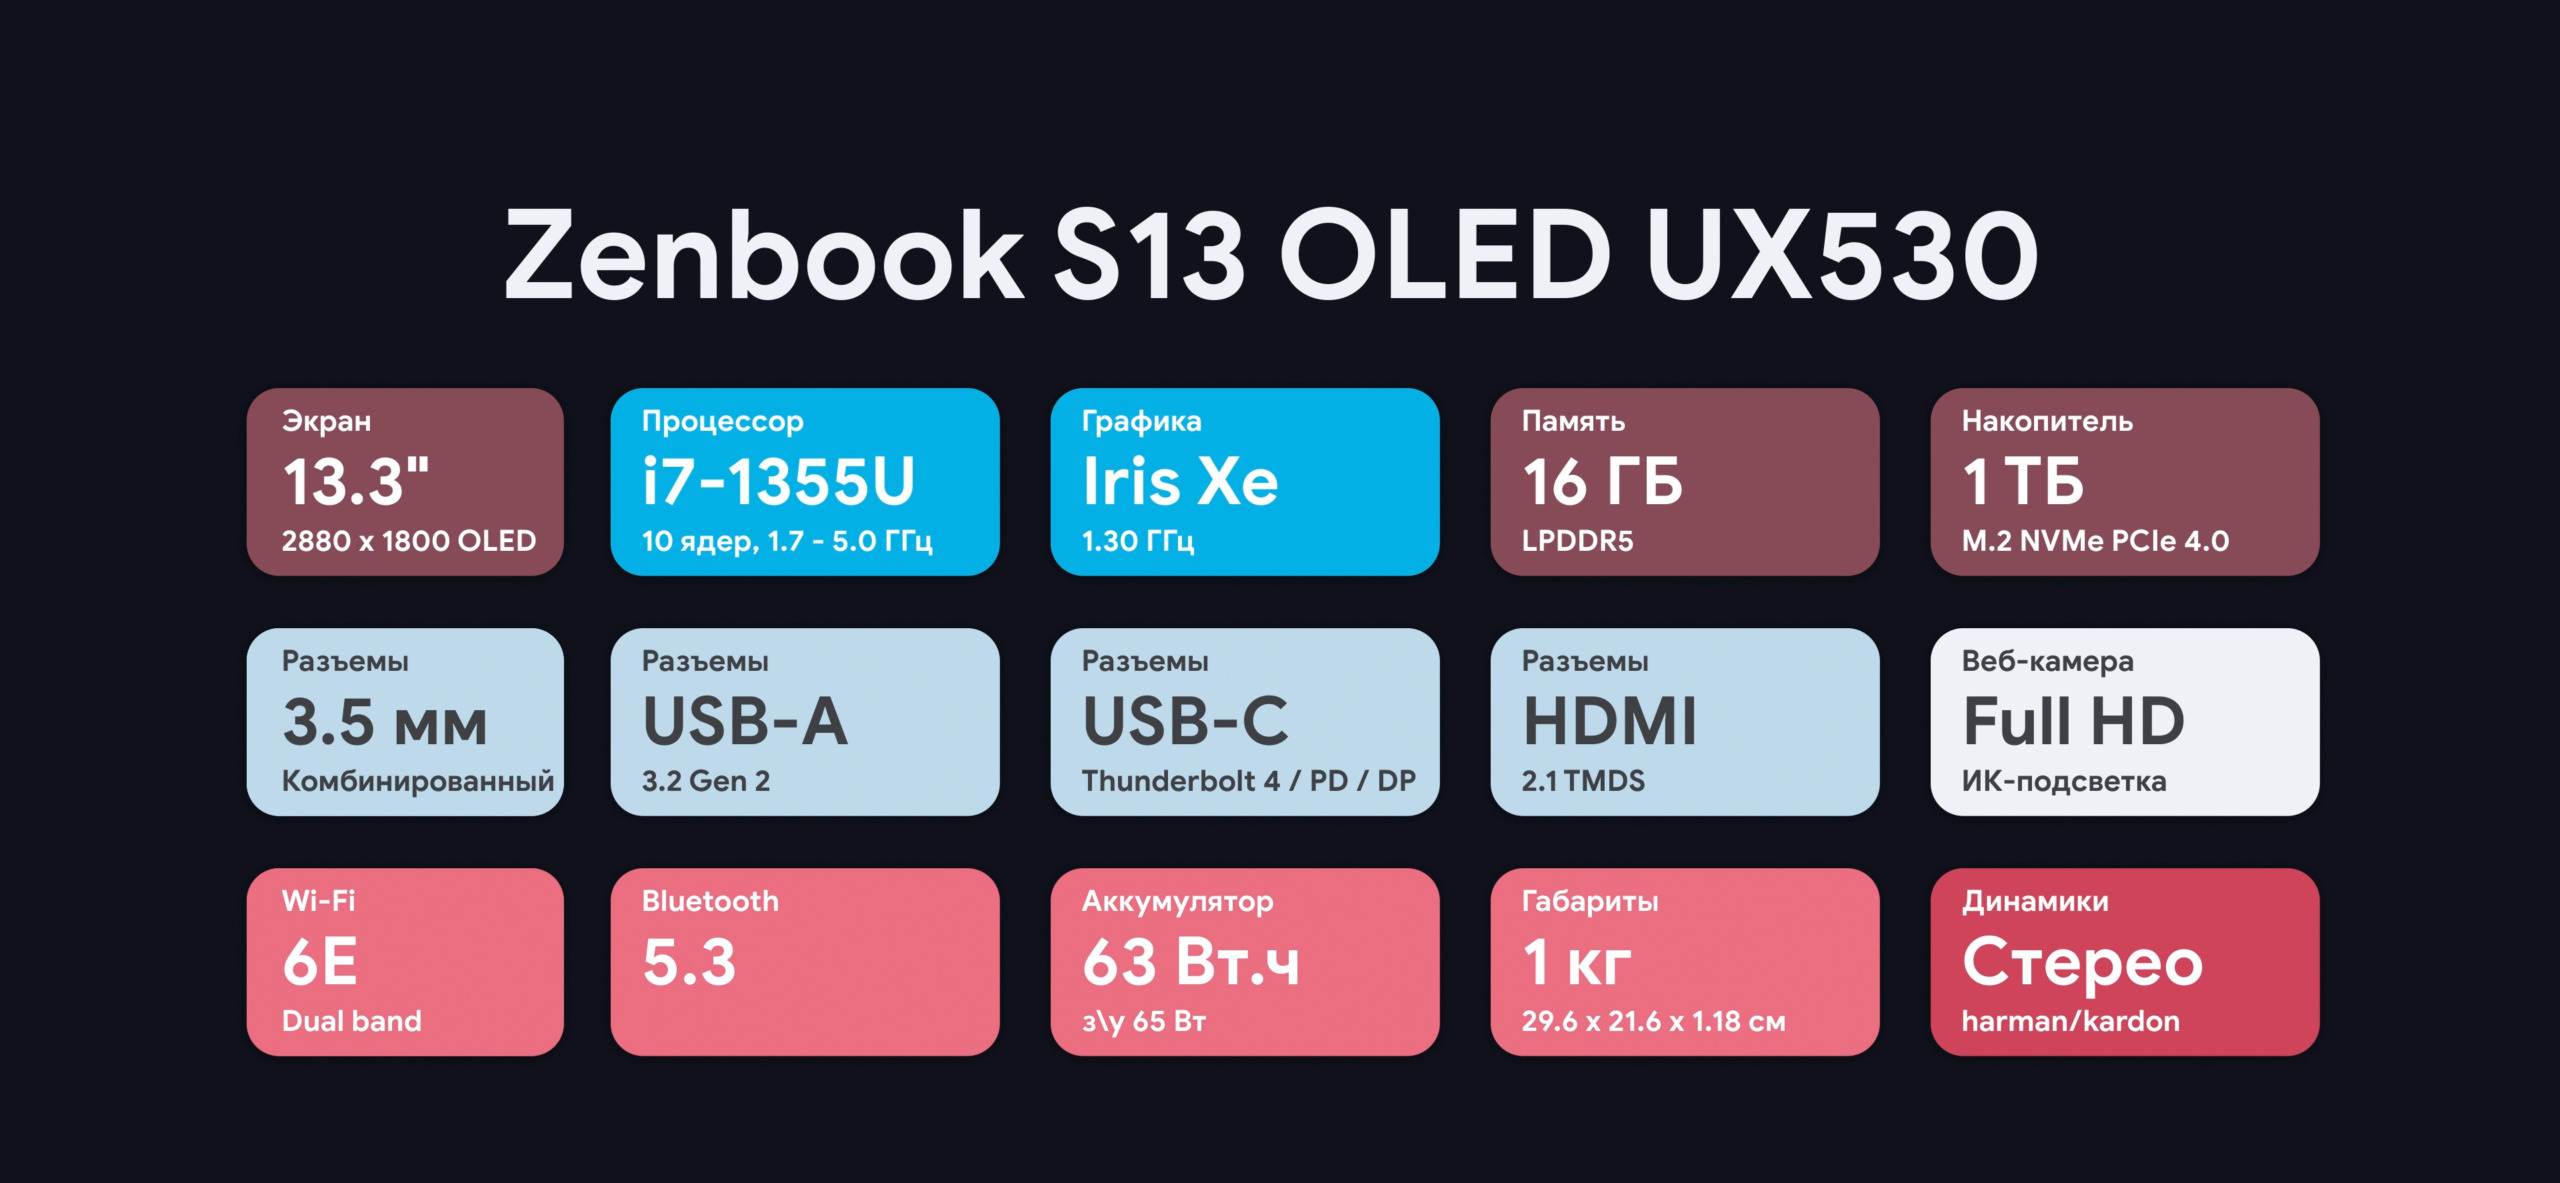 Asus ZenBook S13 OLED характеристики